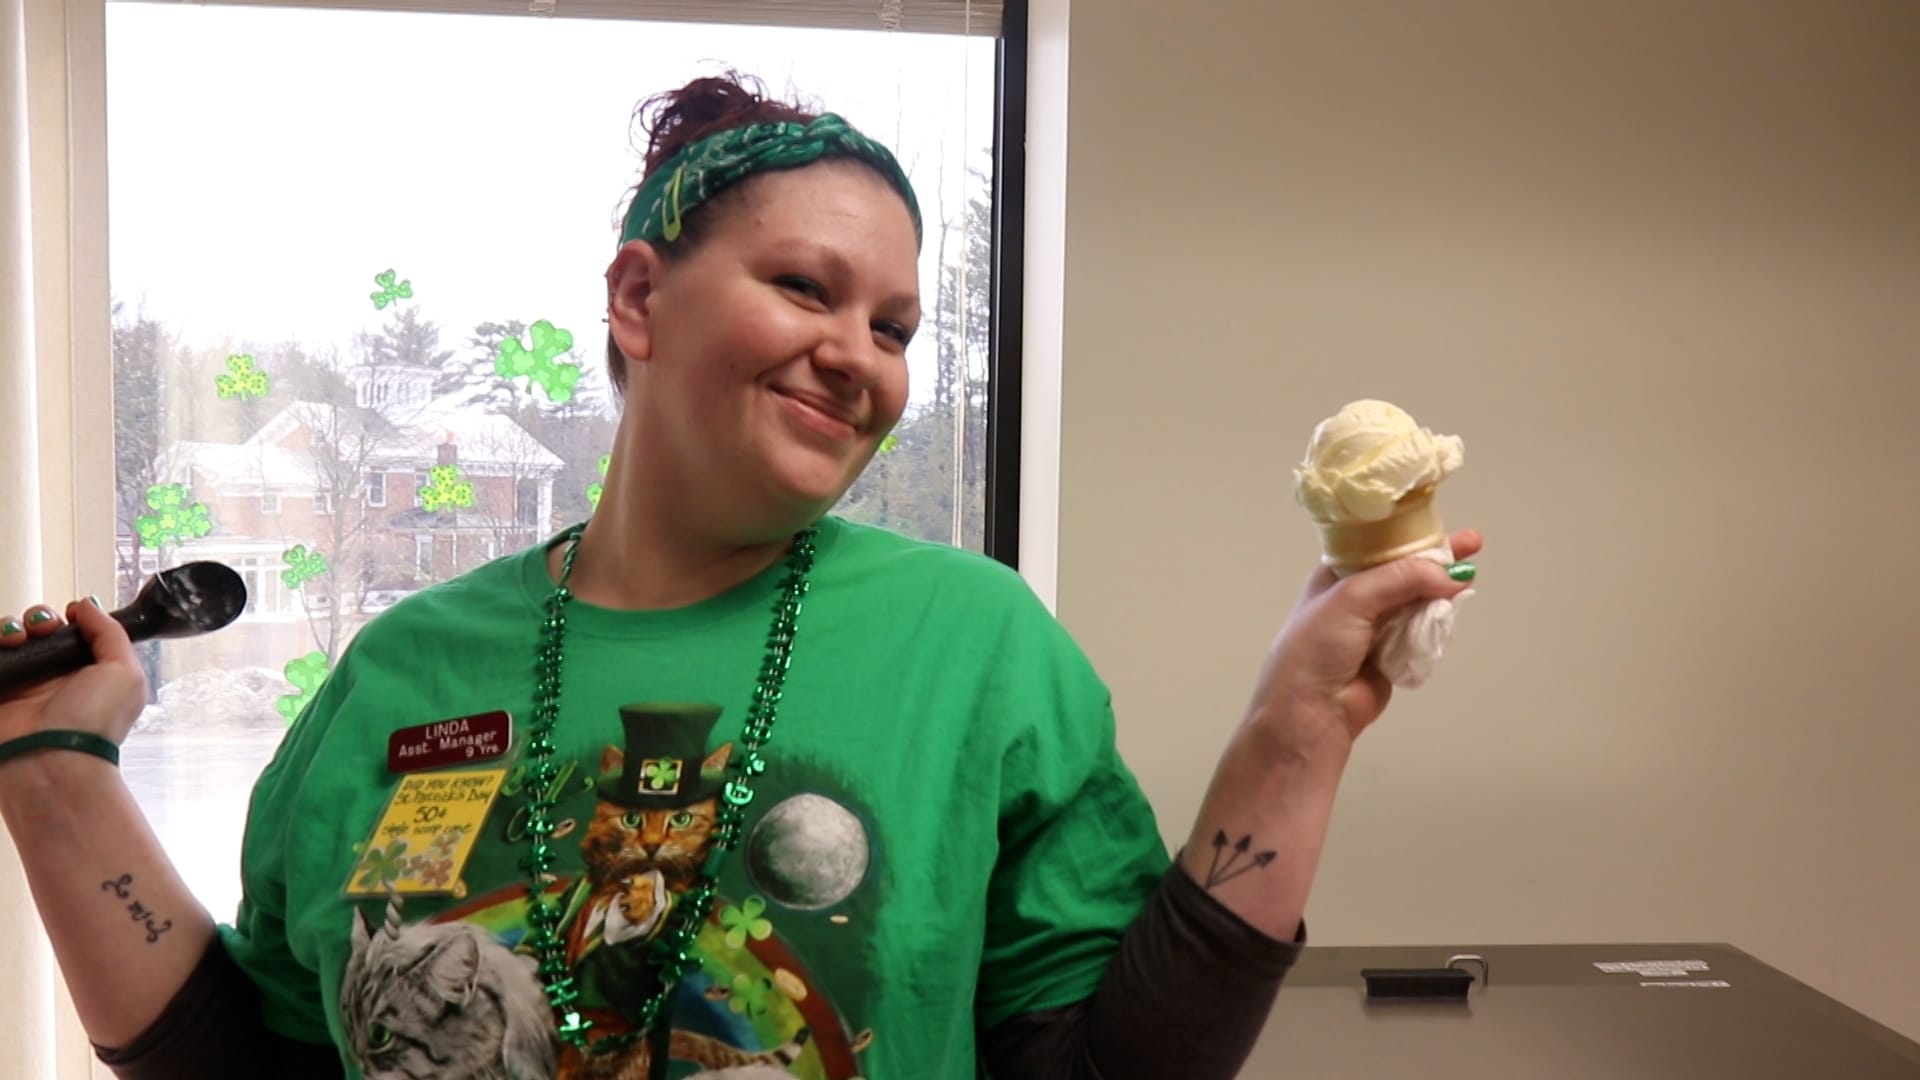 Linda the partner holding a vanilla ice cream cone